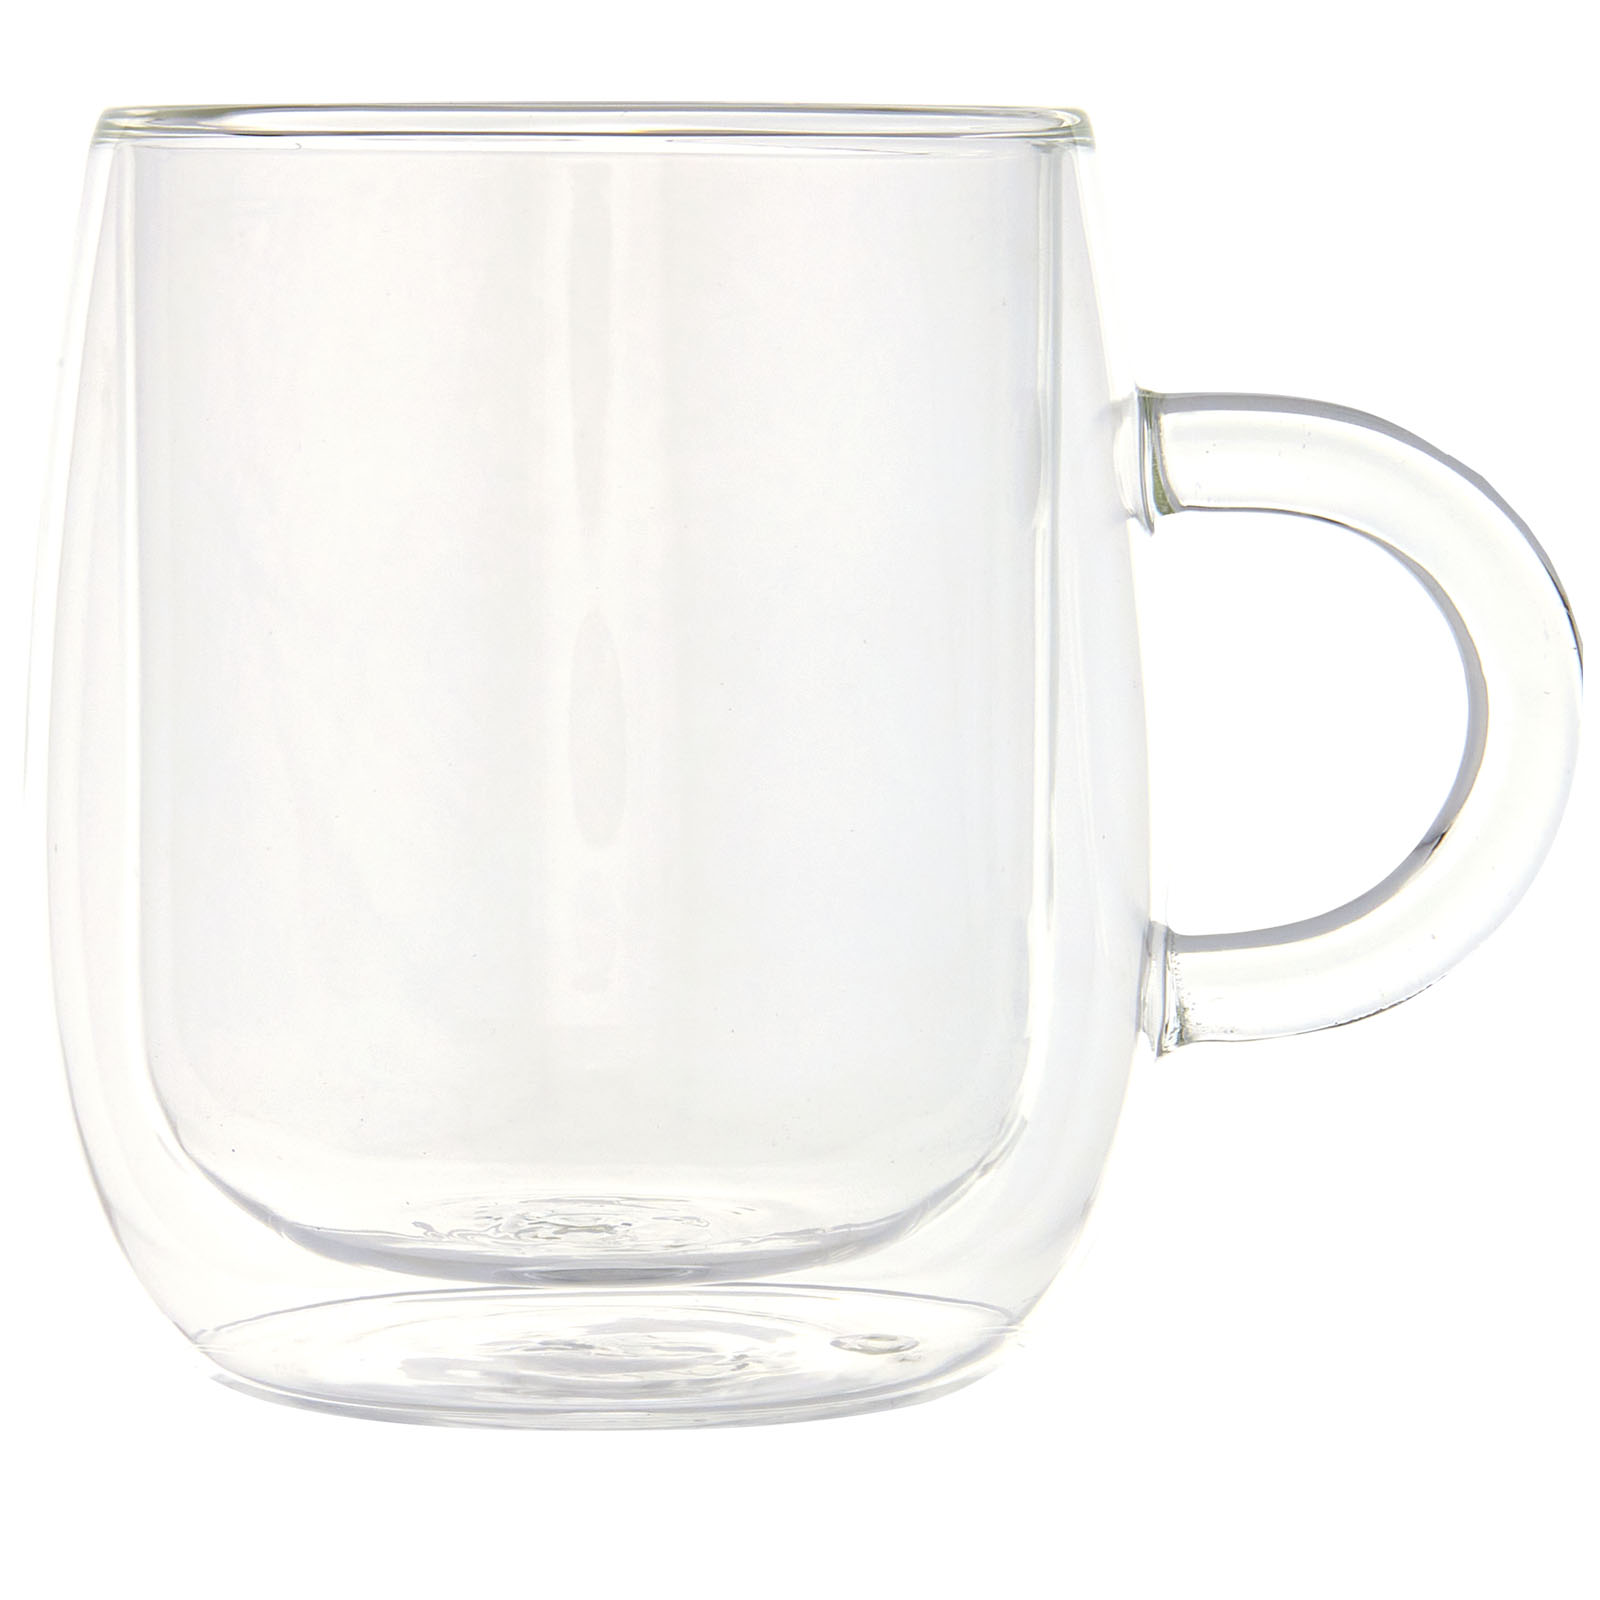 Advertising Standard mugs - Iris 330 ml glass mug - 2